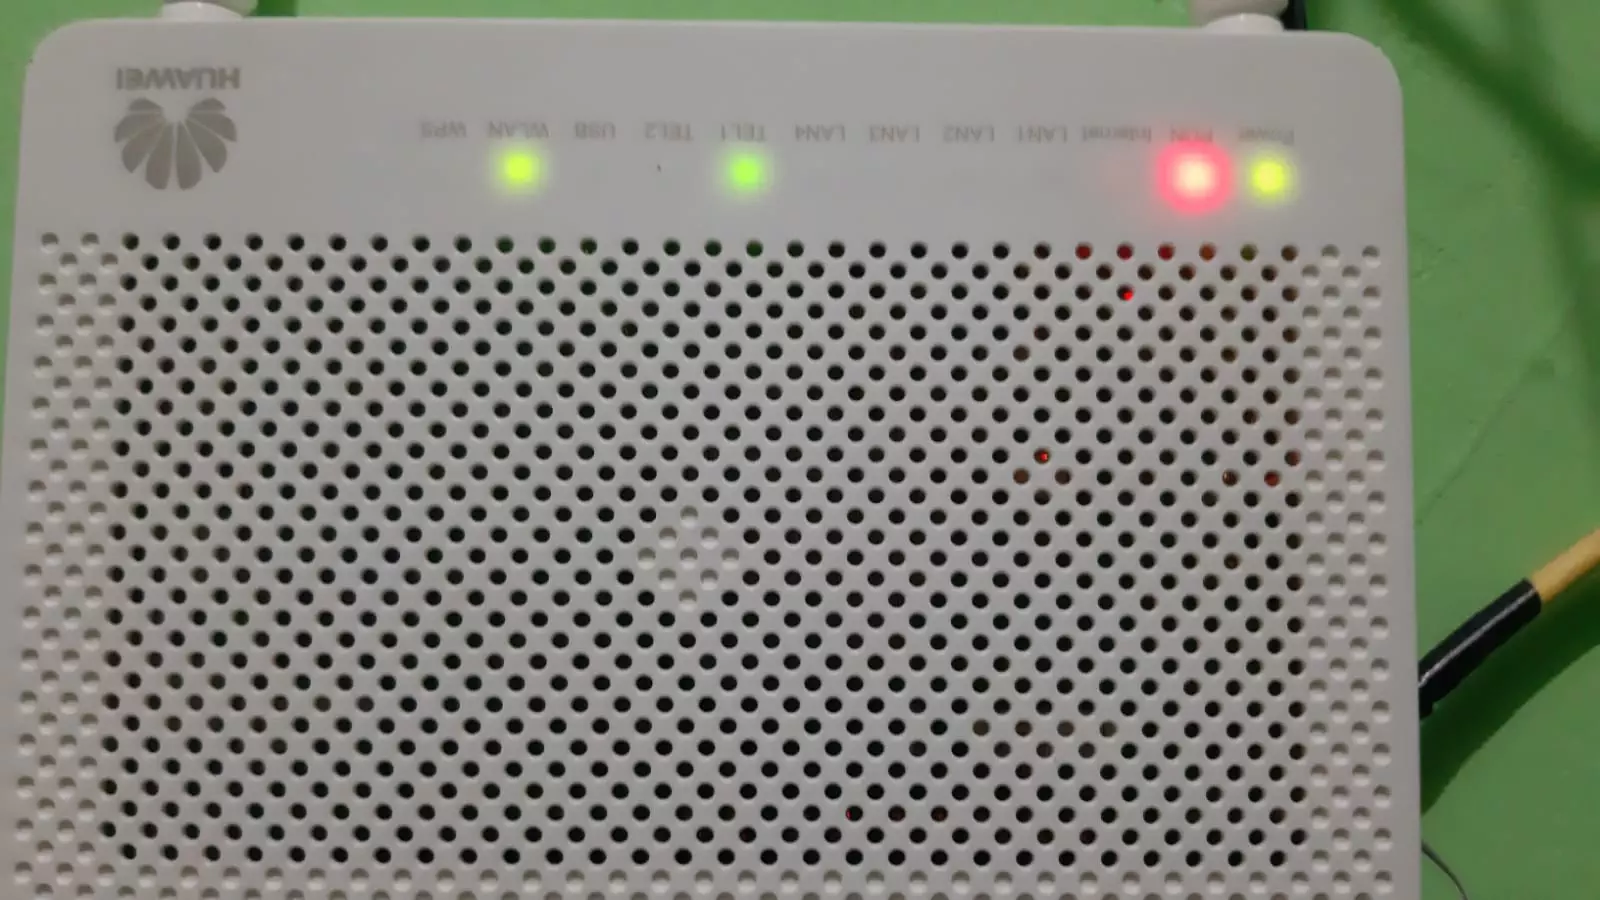 Modem lampu PON Huawei Indihome berkedip merah 